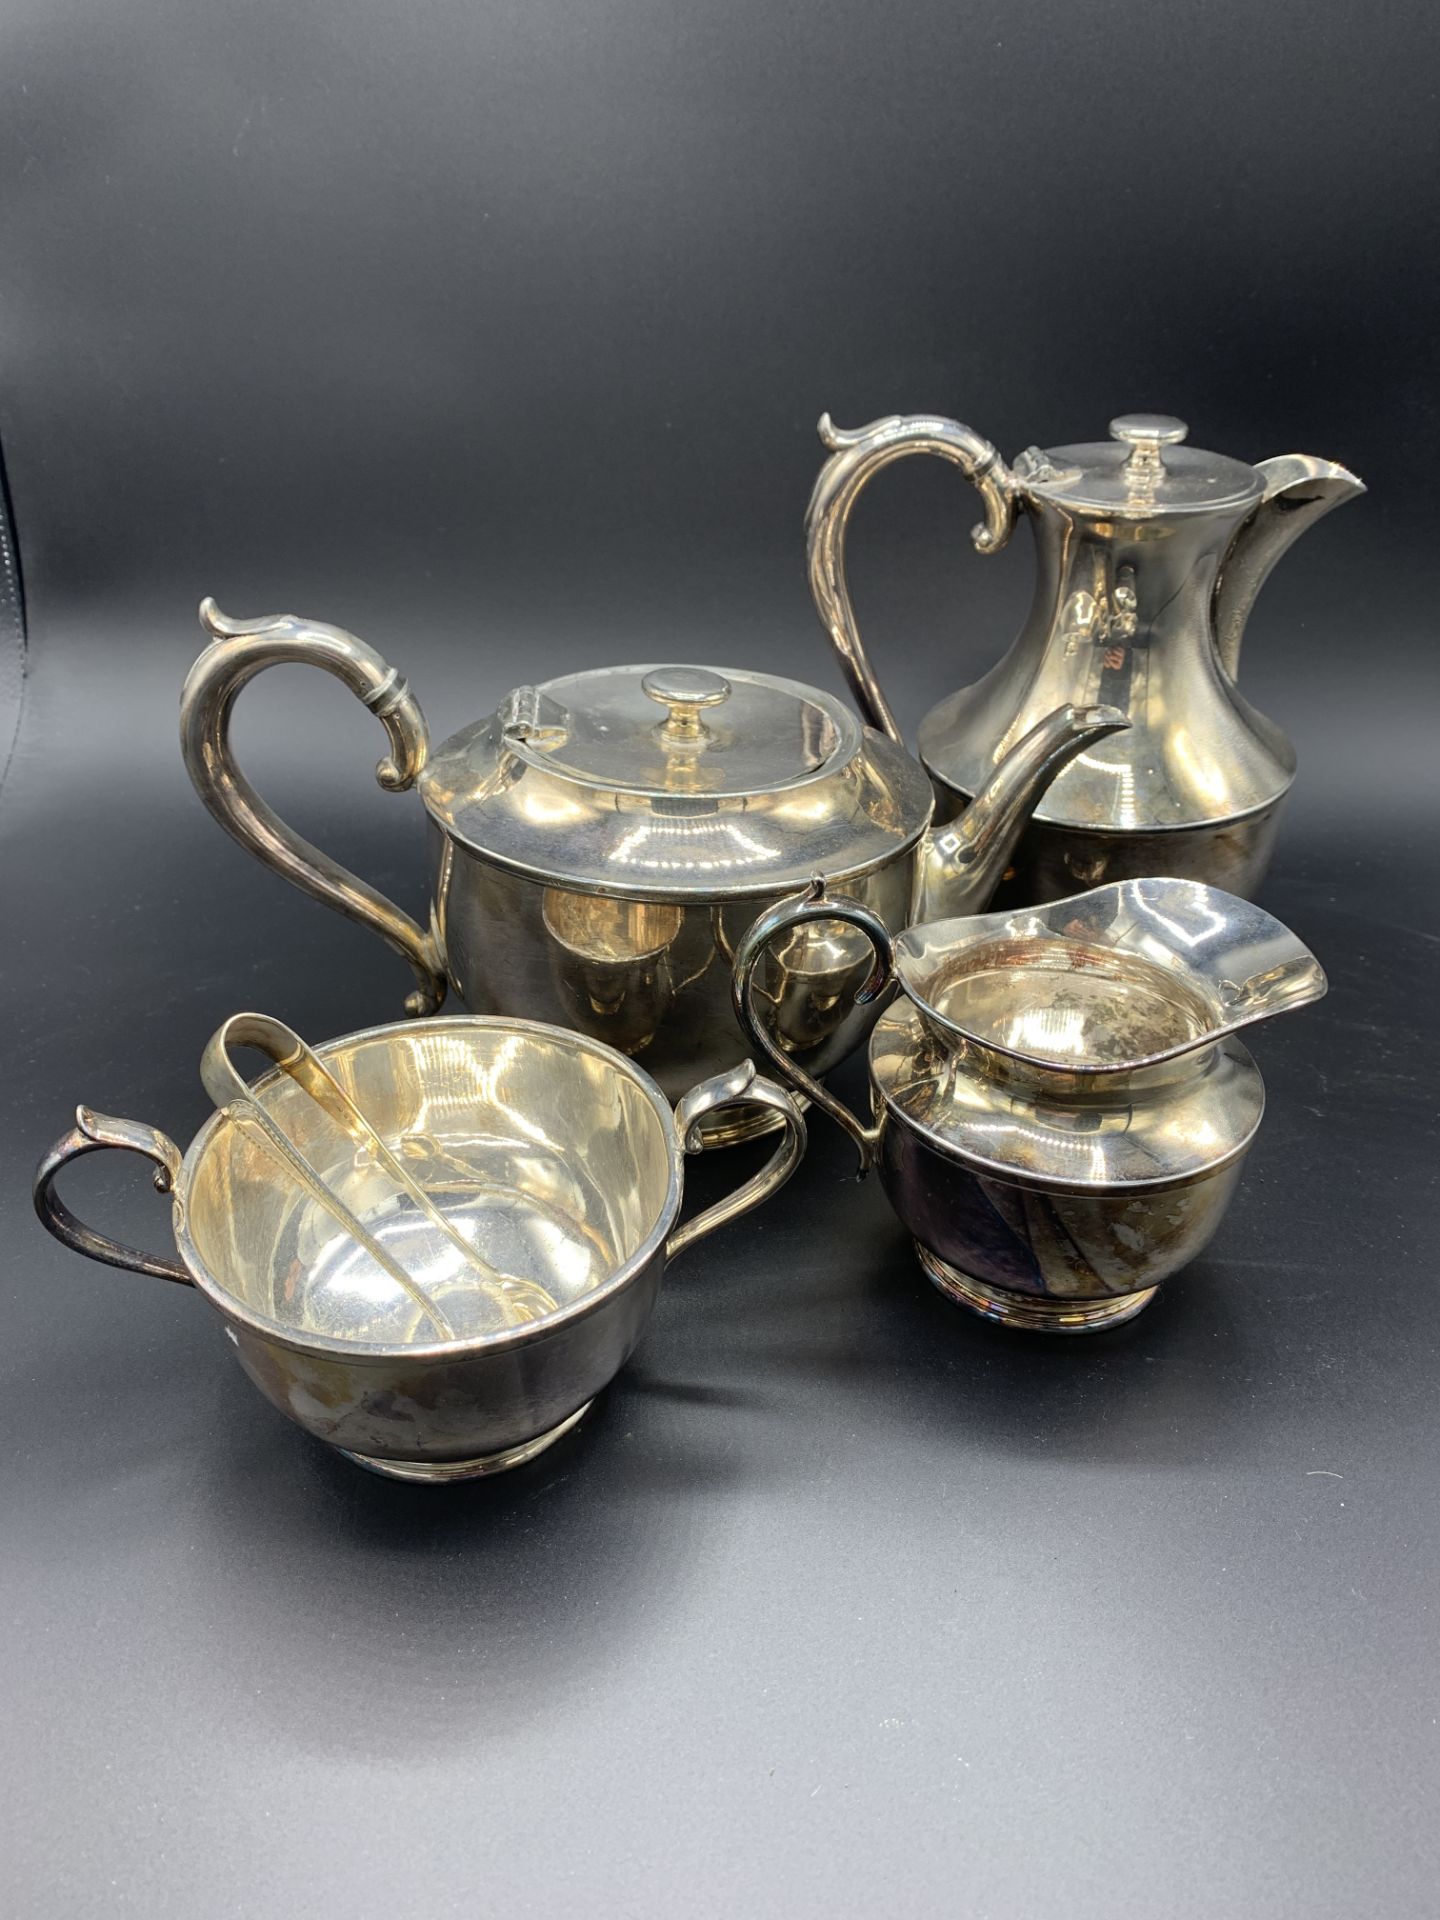 Silver plate tea service by James Dixon & Sons